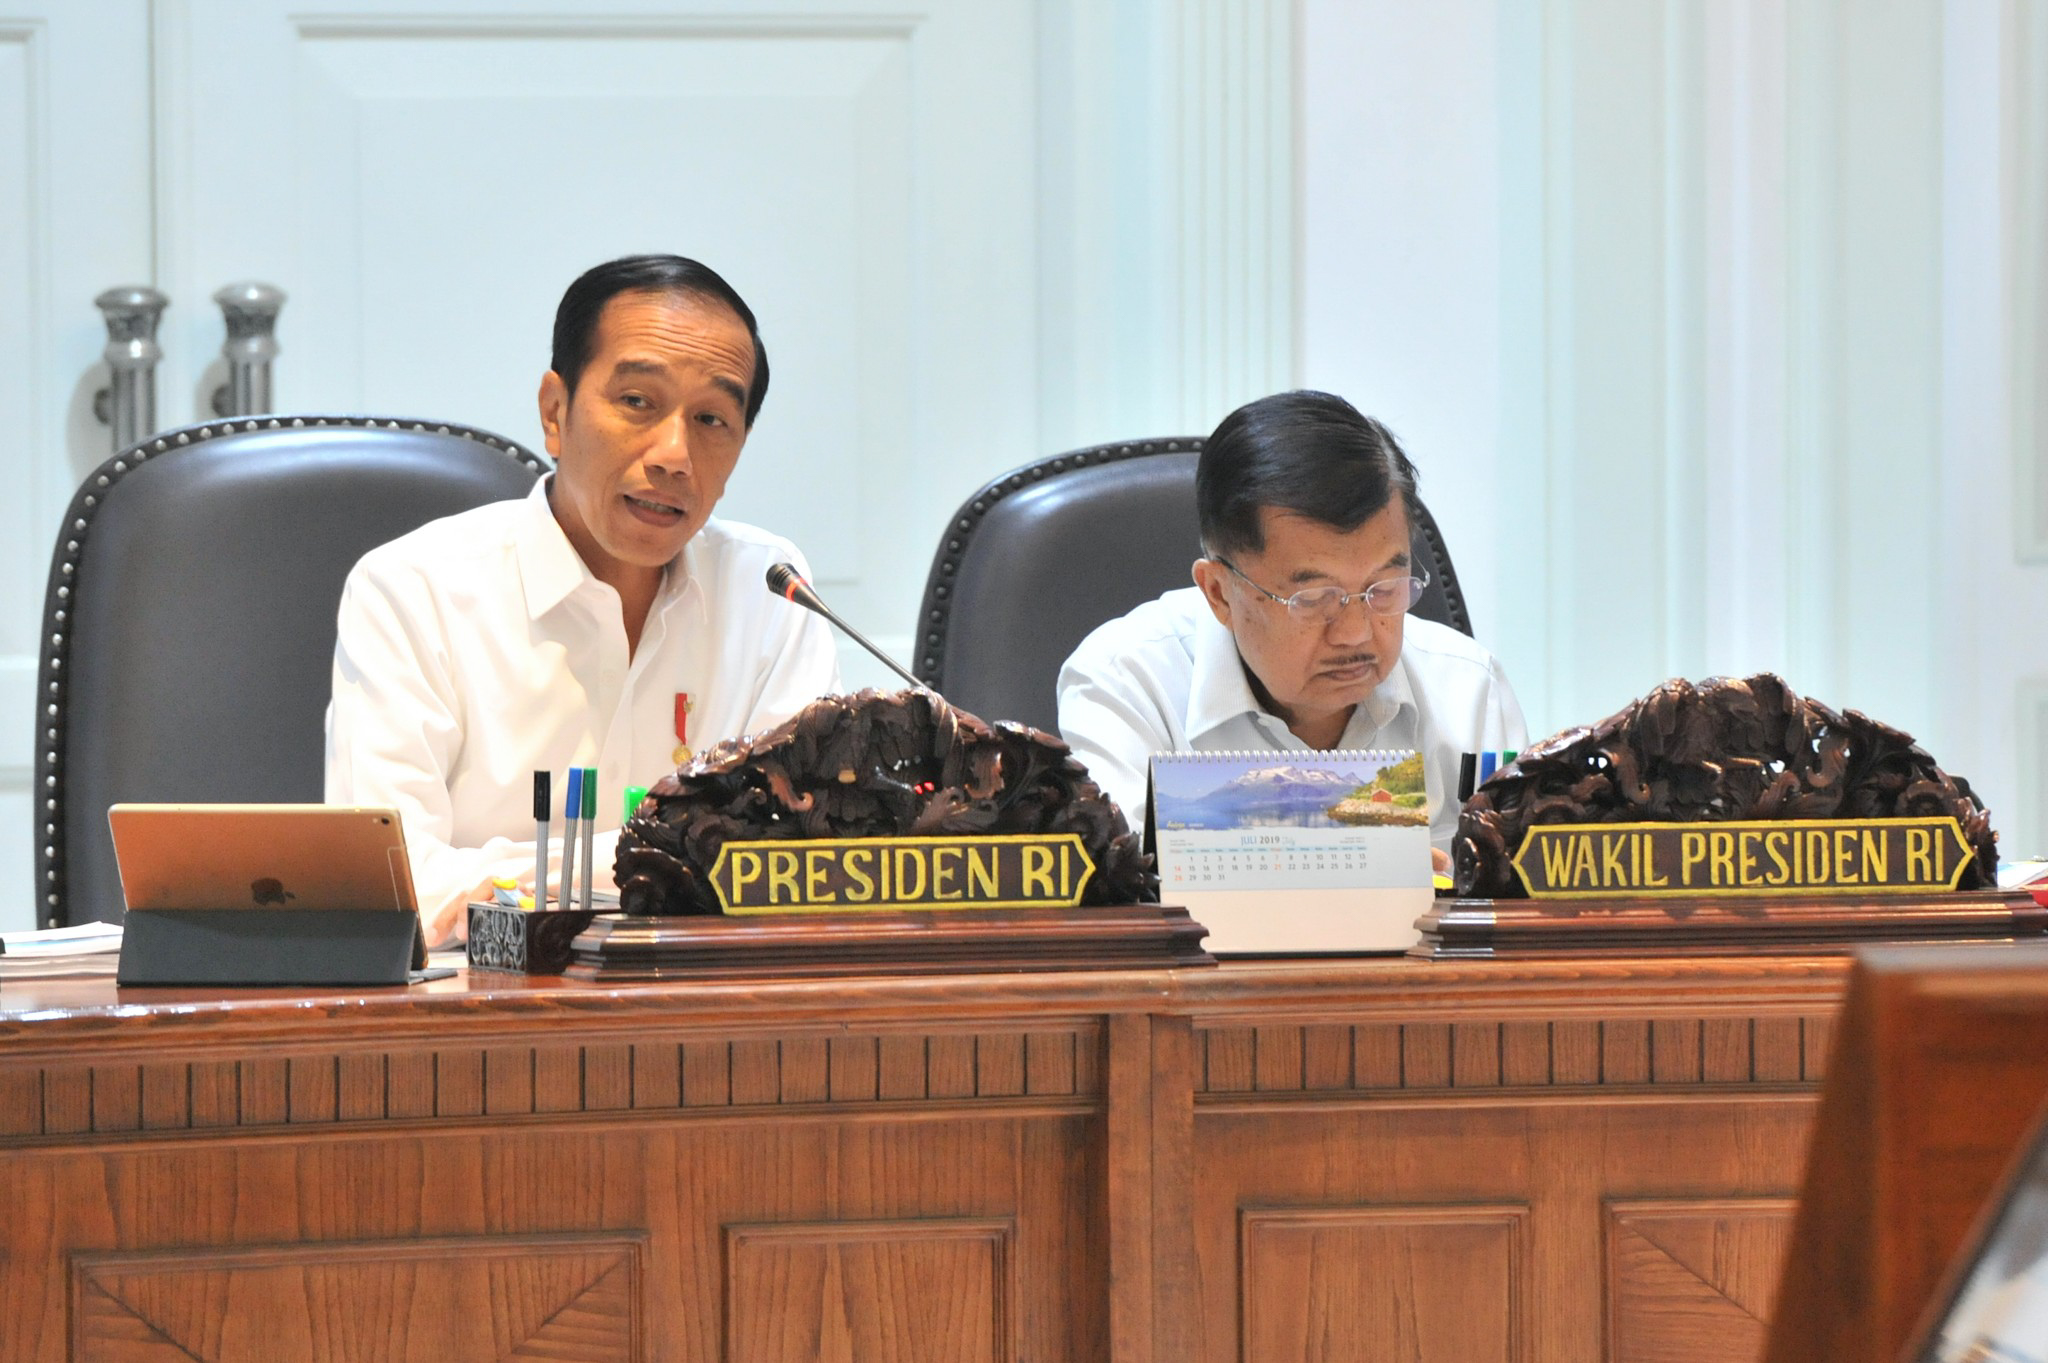 Pembangunan 10 Bali Baru, Presiden Jokowi Sebut Beberapa Masalah Yang Harus Diselesaikan